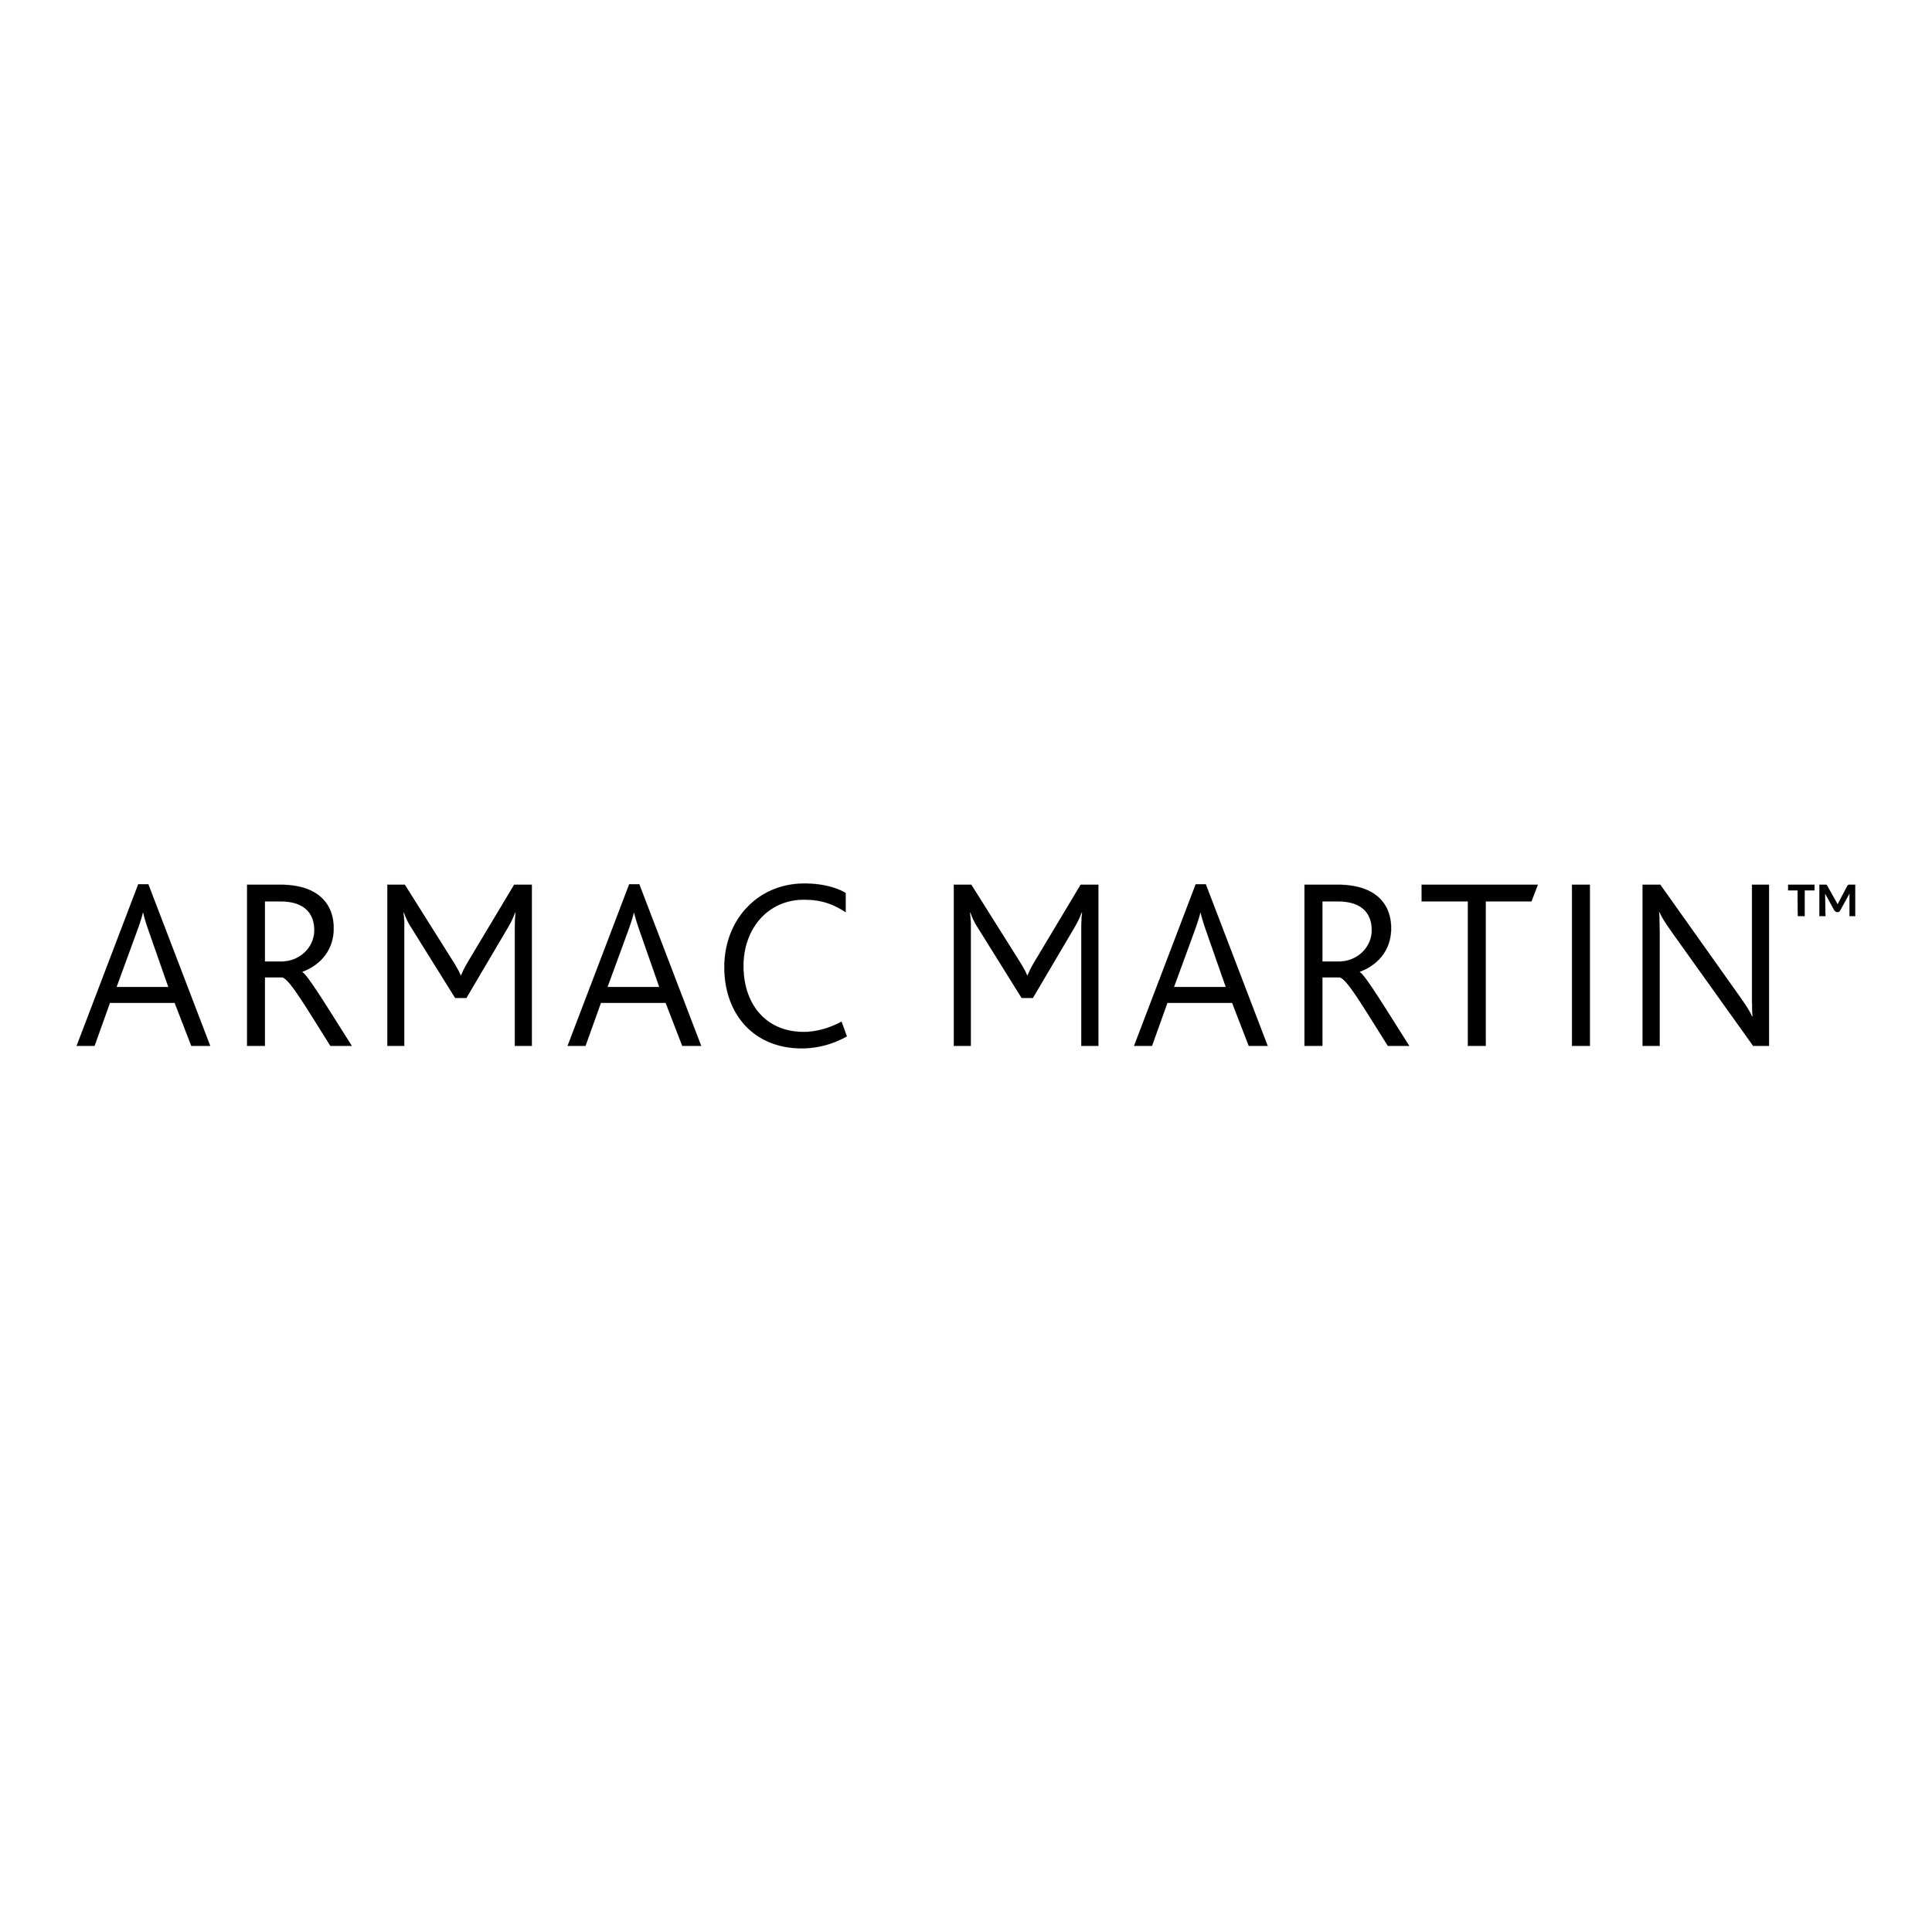 Armac Martin Black Wordmark Logo.jpg